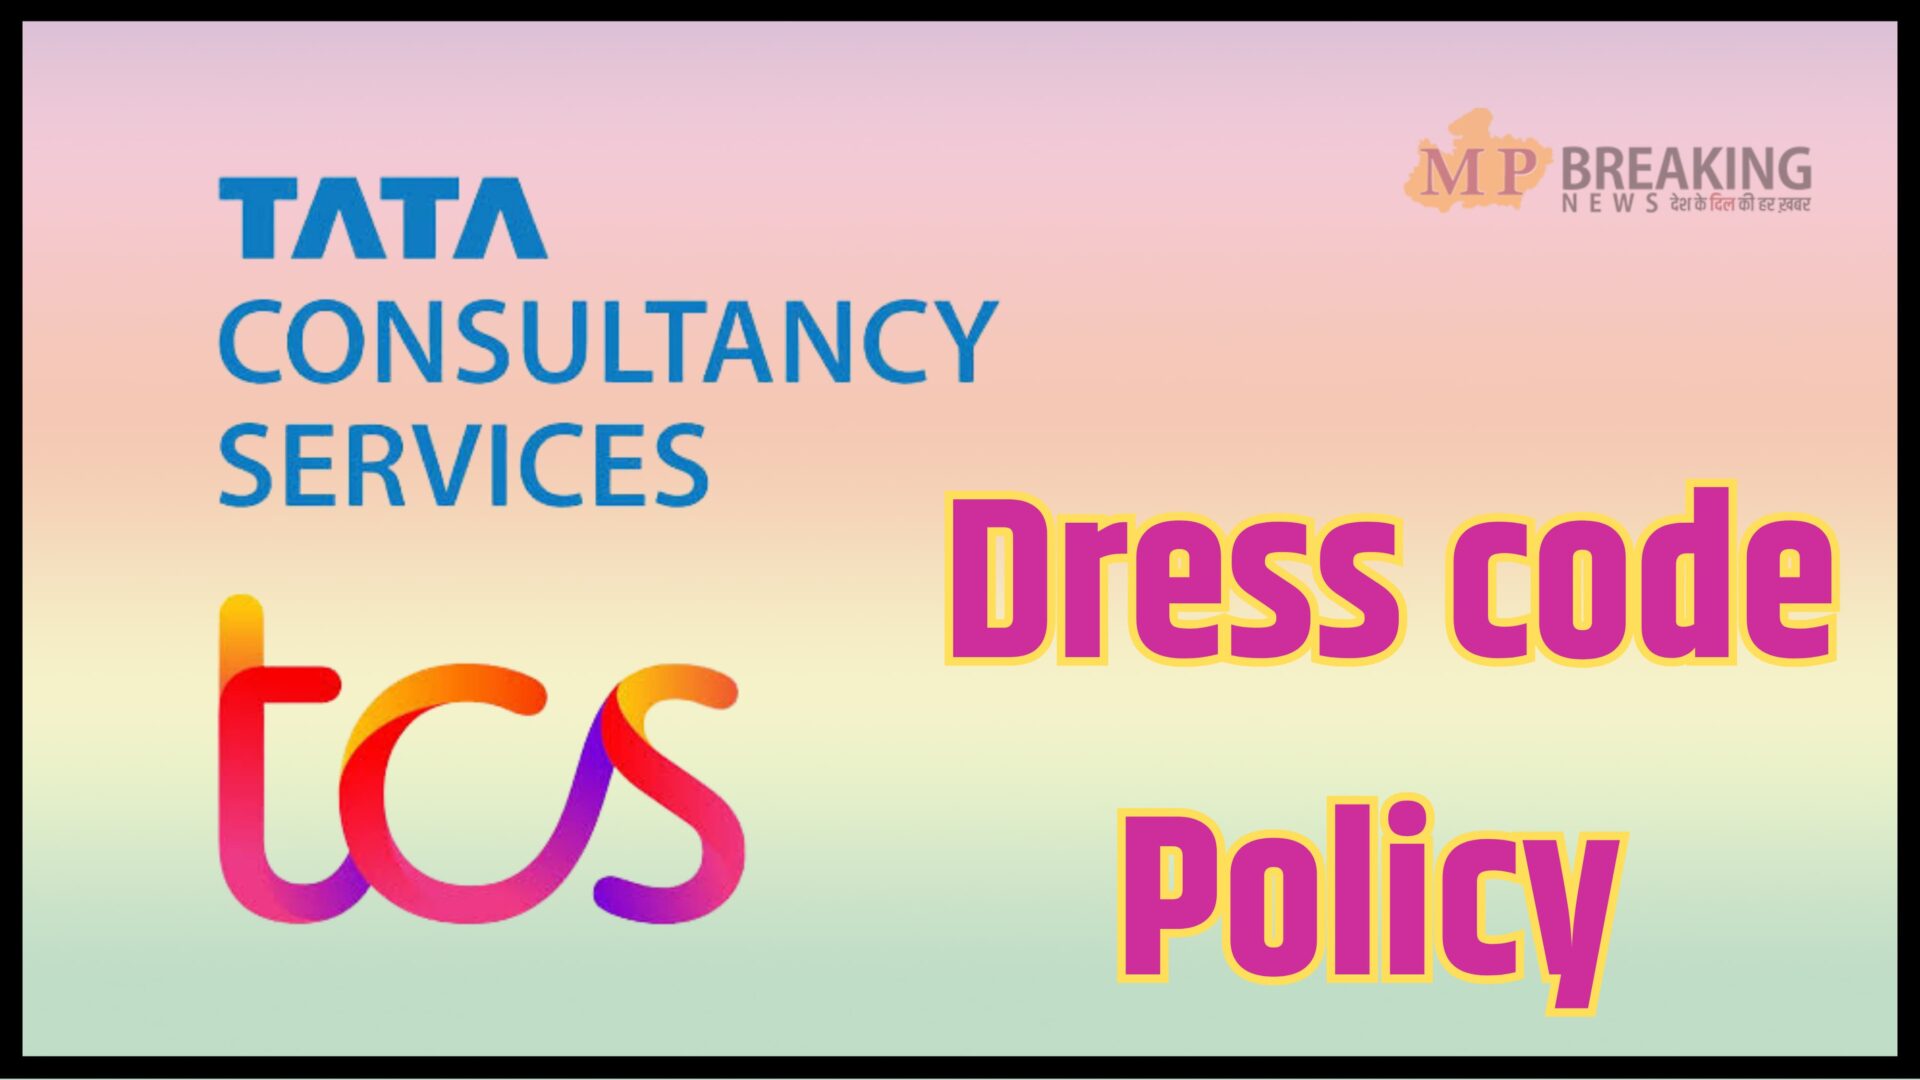 TCS Dress Code Policy